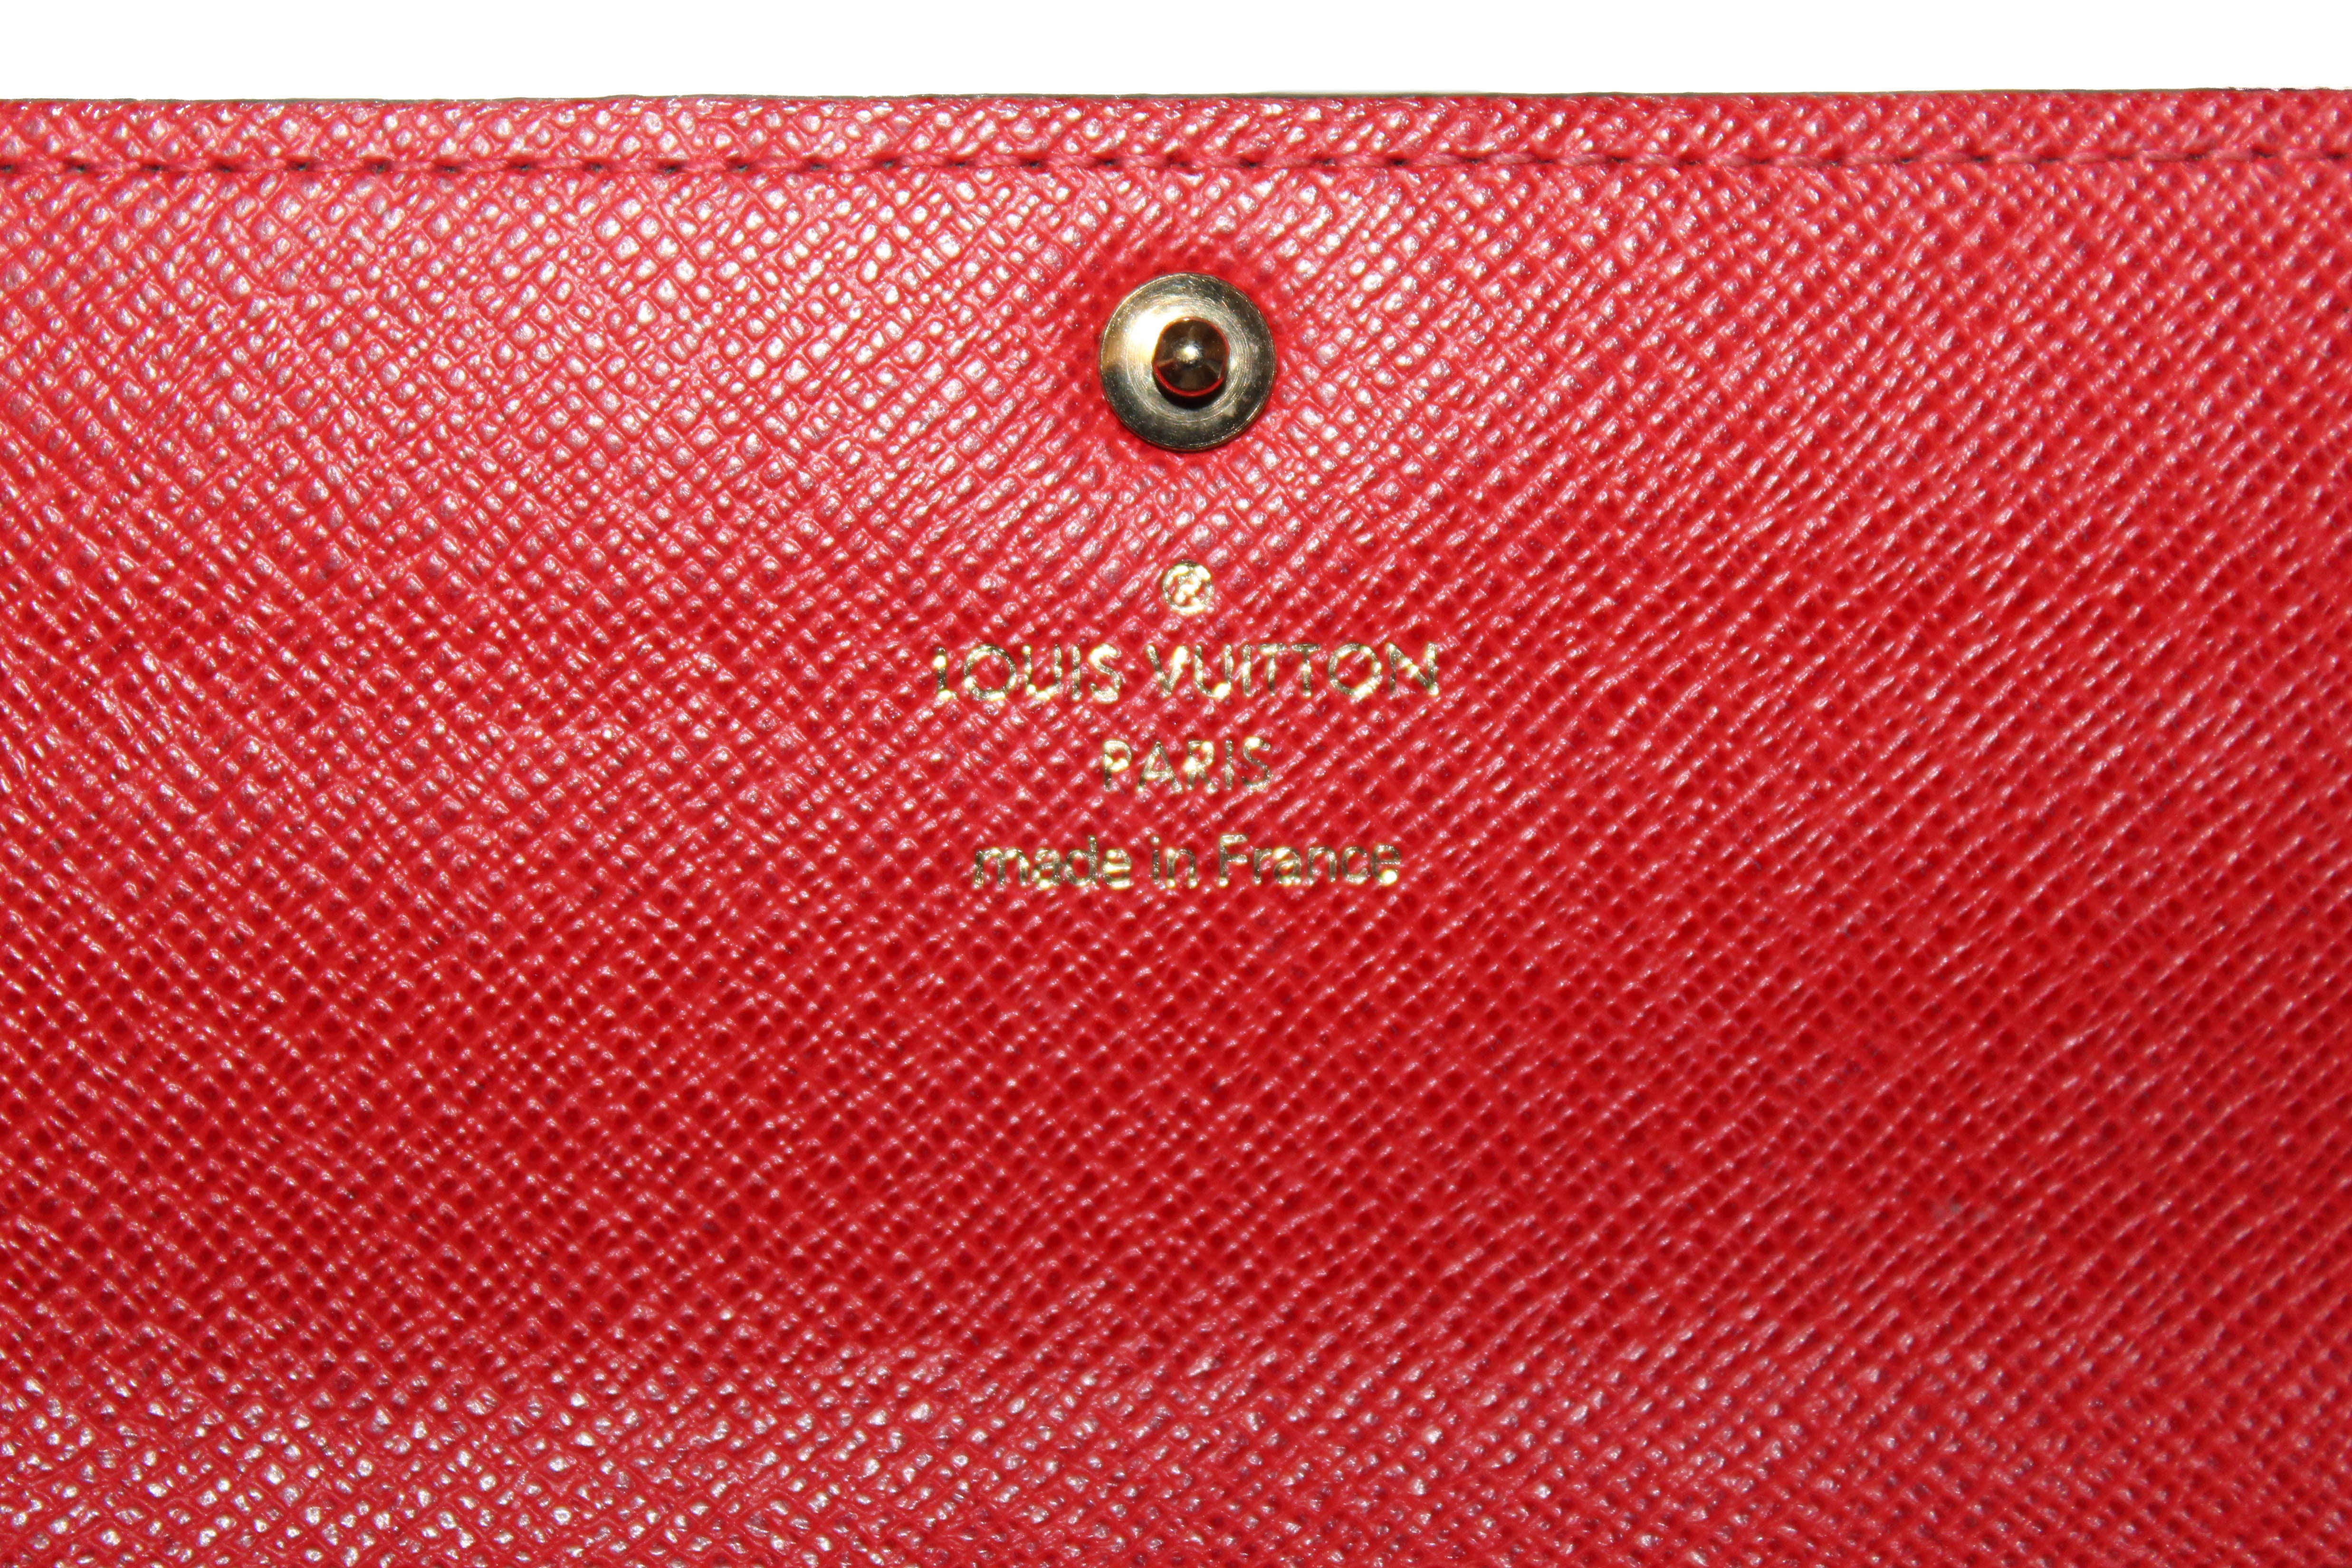 Authentic Louis Vuitton Limited Edition Monogram Groom Sarah Wallet